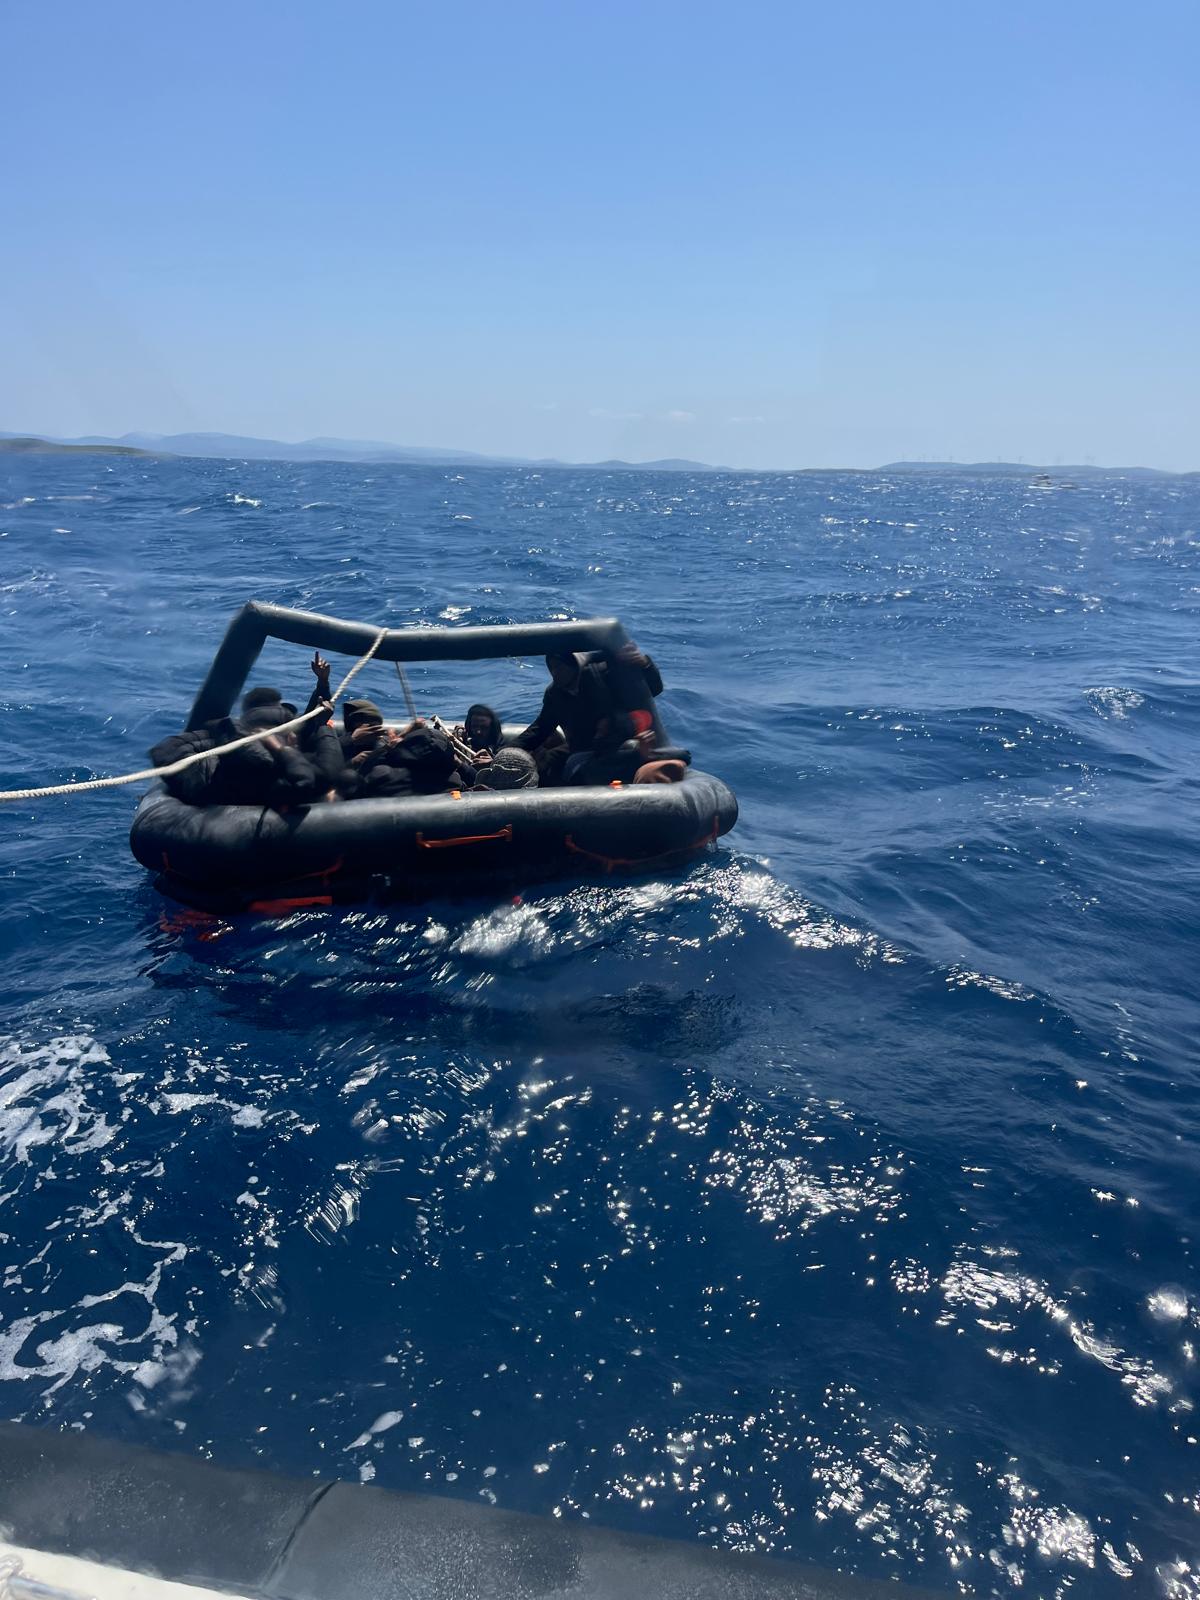 37 Irregular Migrants Were Rescued Off the Coast of İzmir